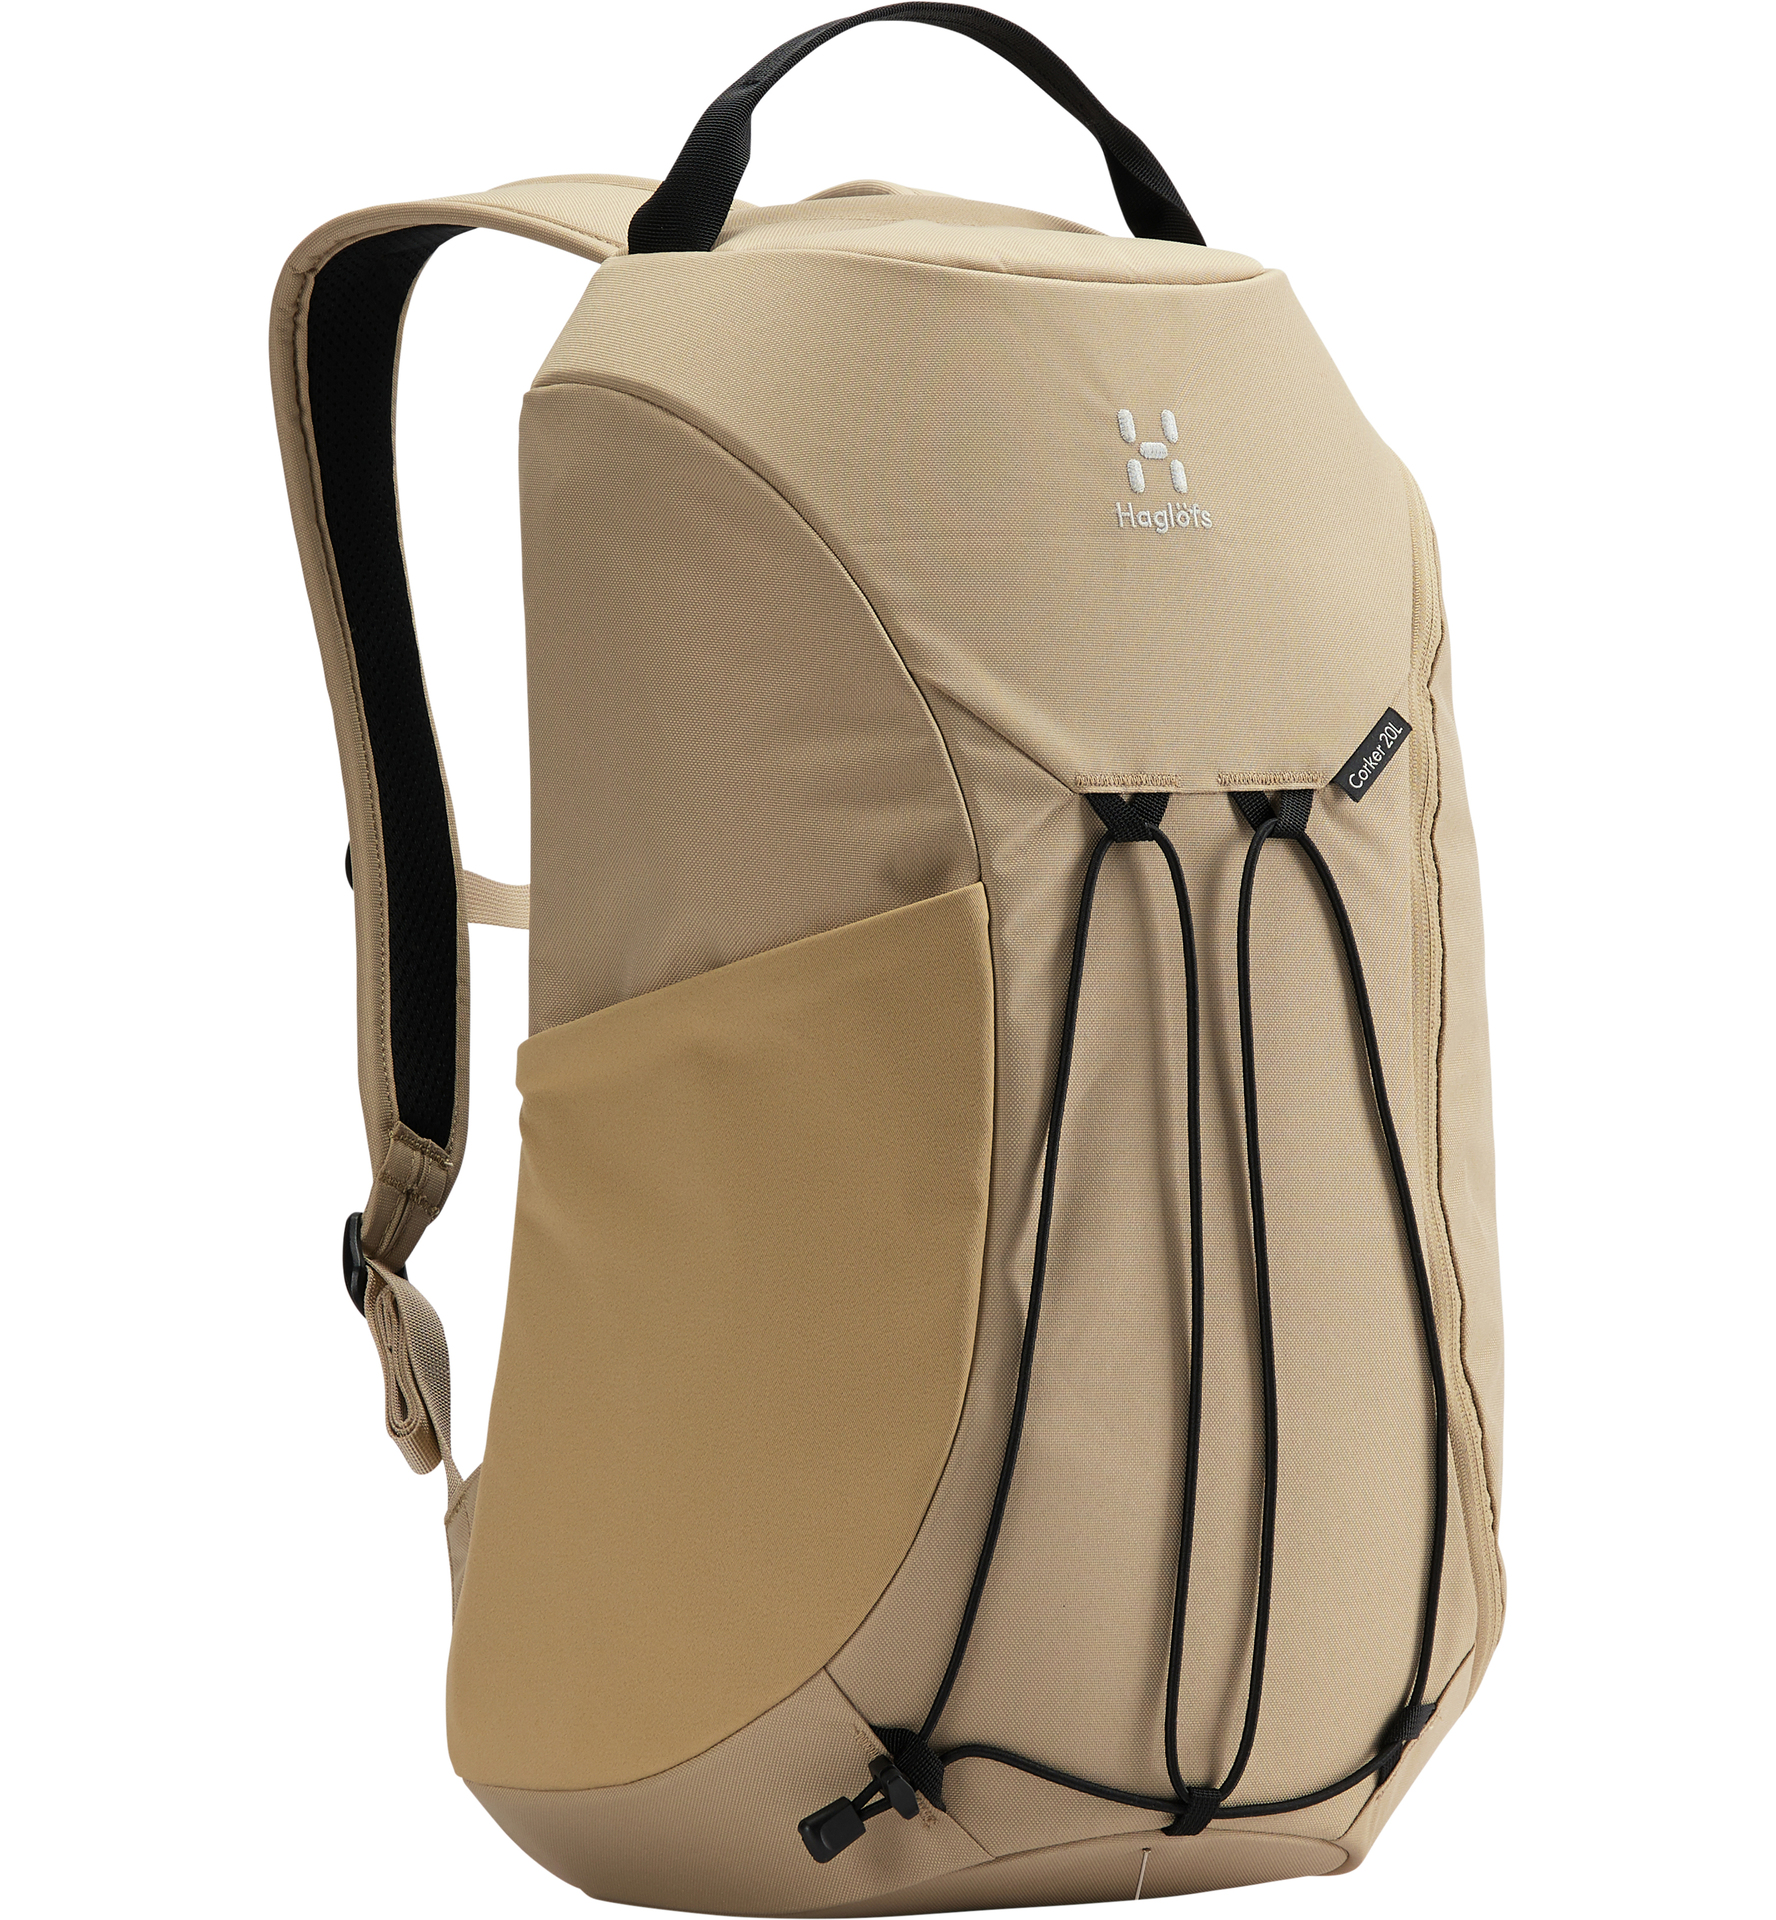 Corker 20 | Sand | Activities | Laptop backpacks | Daypacks 